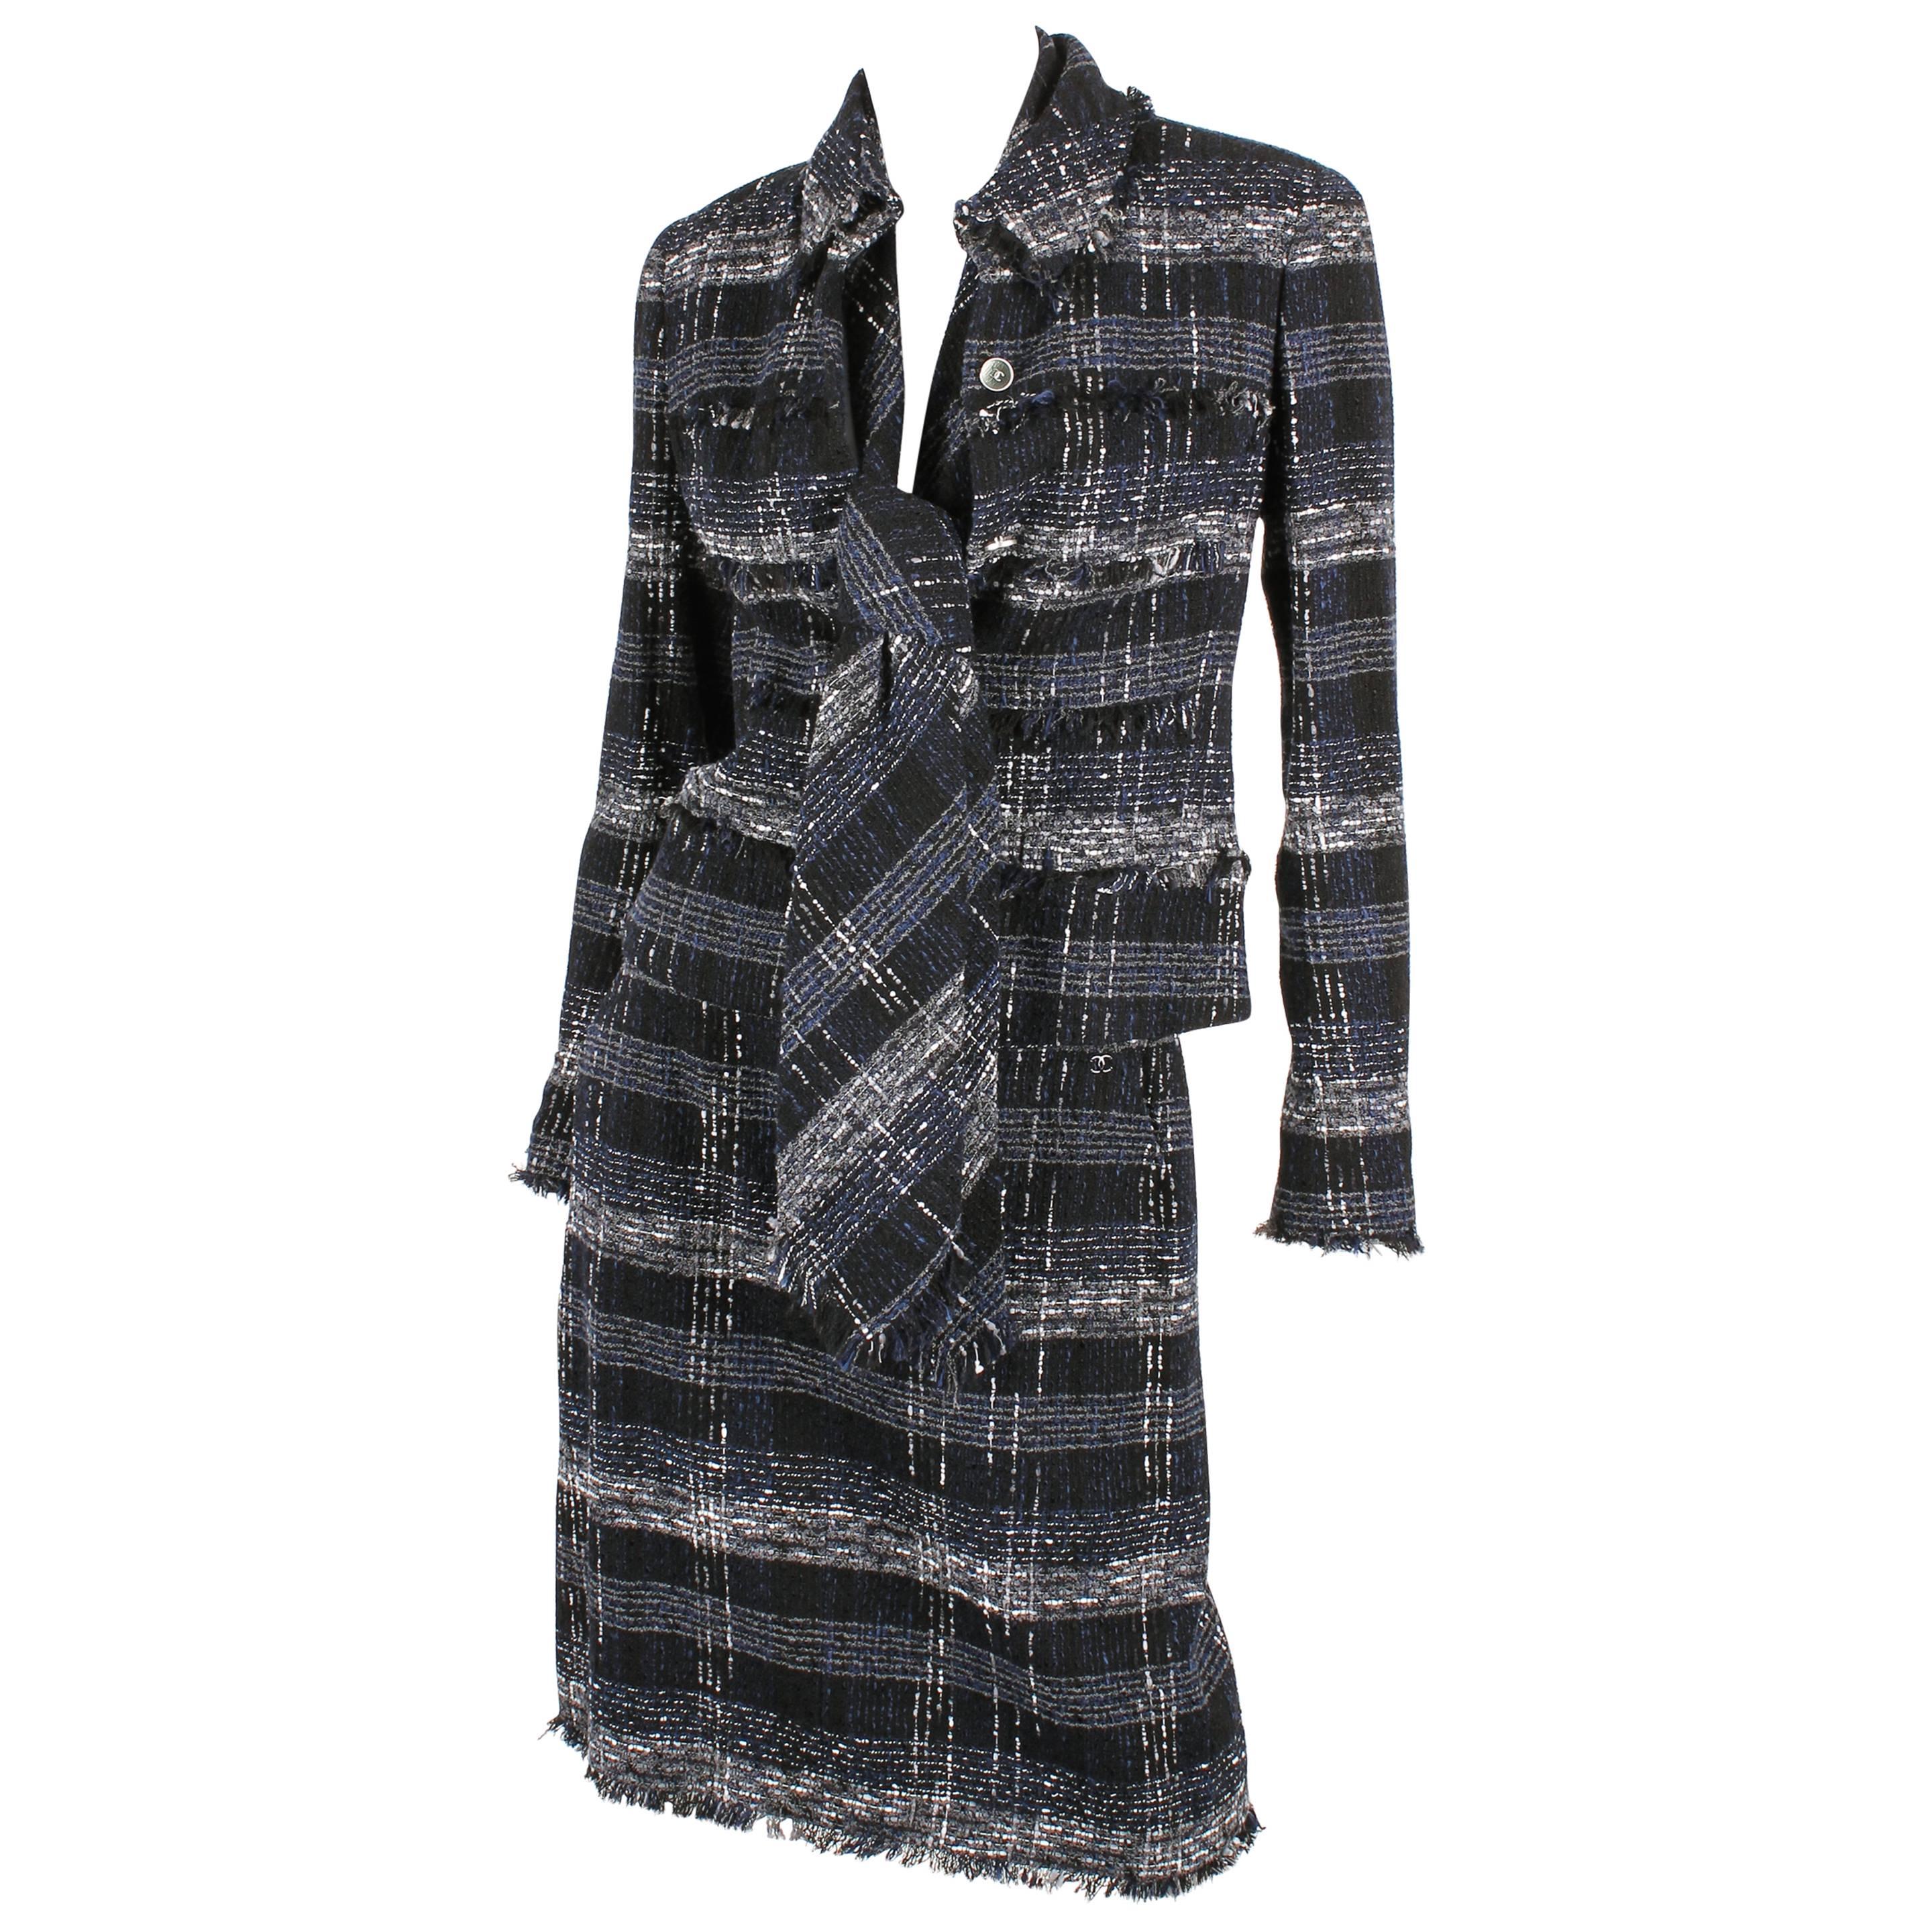 Chanel Suit 3-pcs Jacket, Skirt & Tie - dark blue/black/grey/white